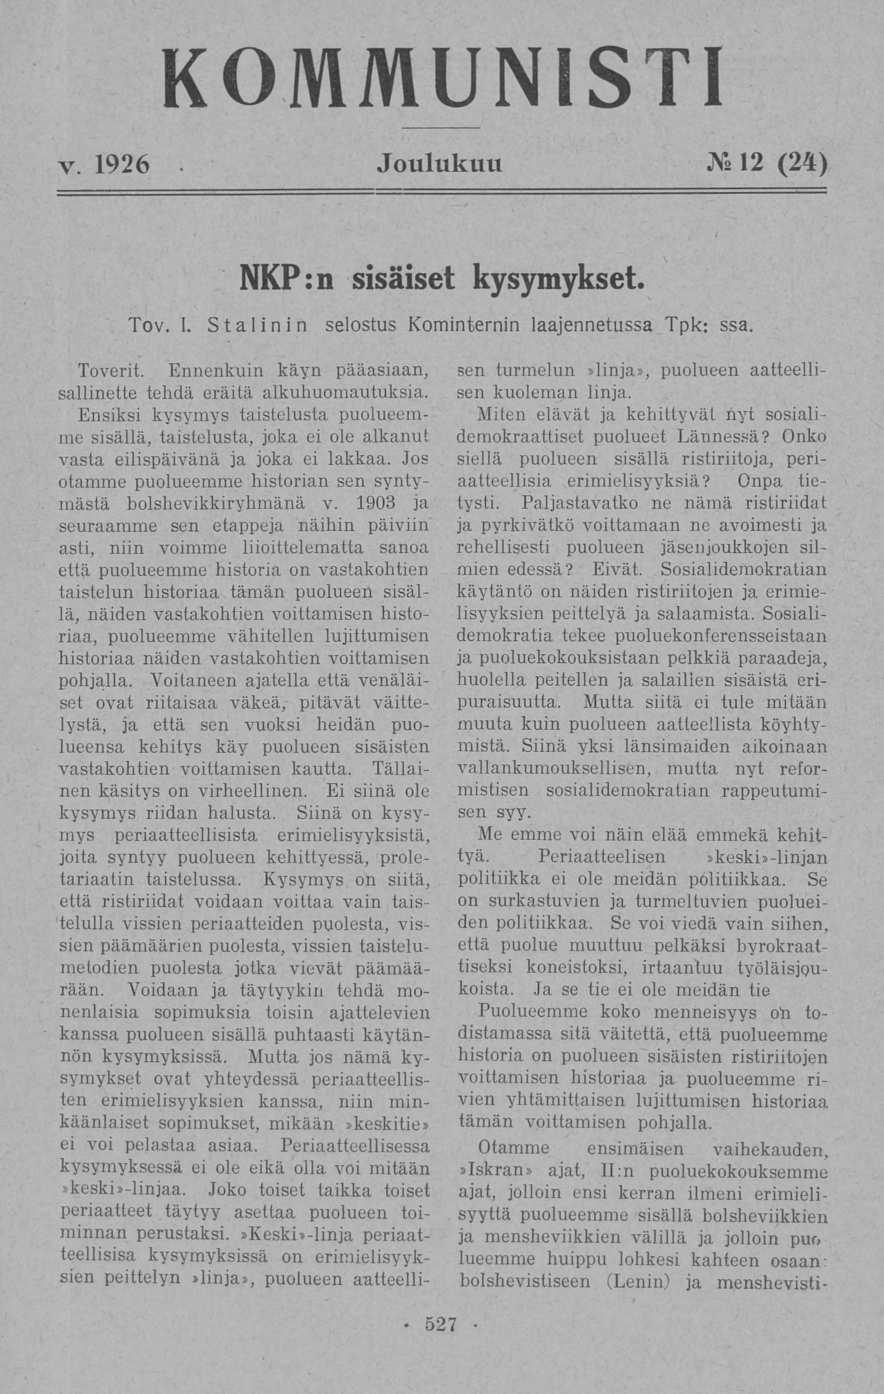 KOMMUNISTI V. 1926 Joulukuu JV» 12 (24) Tov. I. NKP:n sisäiset kysymykset. Stalinin selostus Kominternin laajennetussa Tpk: ssa. Toverit.